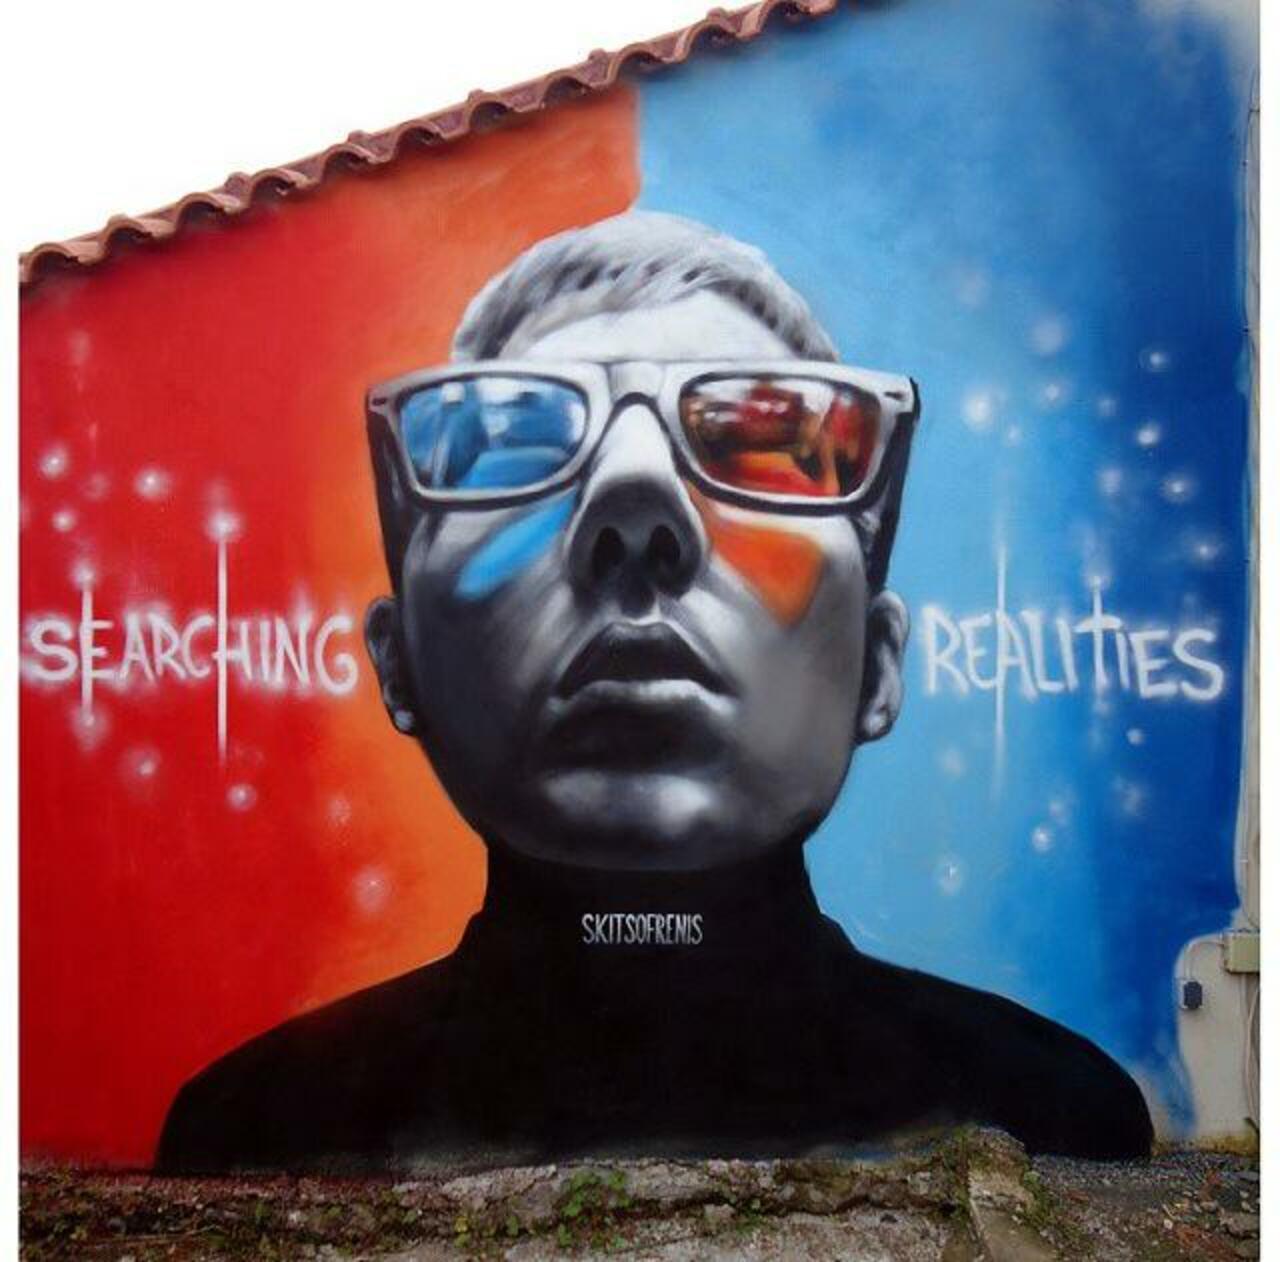 New Street Art titled 'Searching Realties' by skitsofrenis

#art #arte #graffiti #streetart http://t.co/4BnLLw3umu